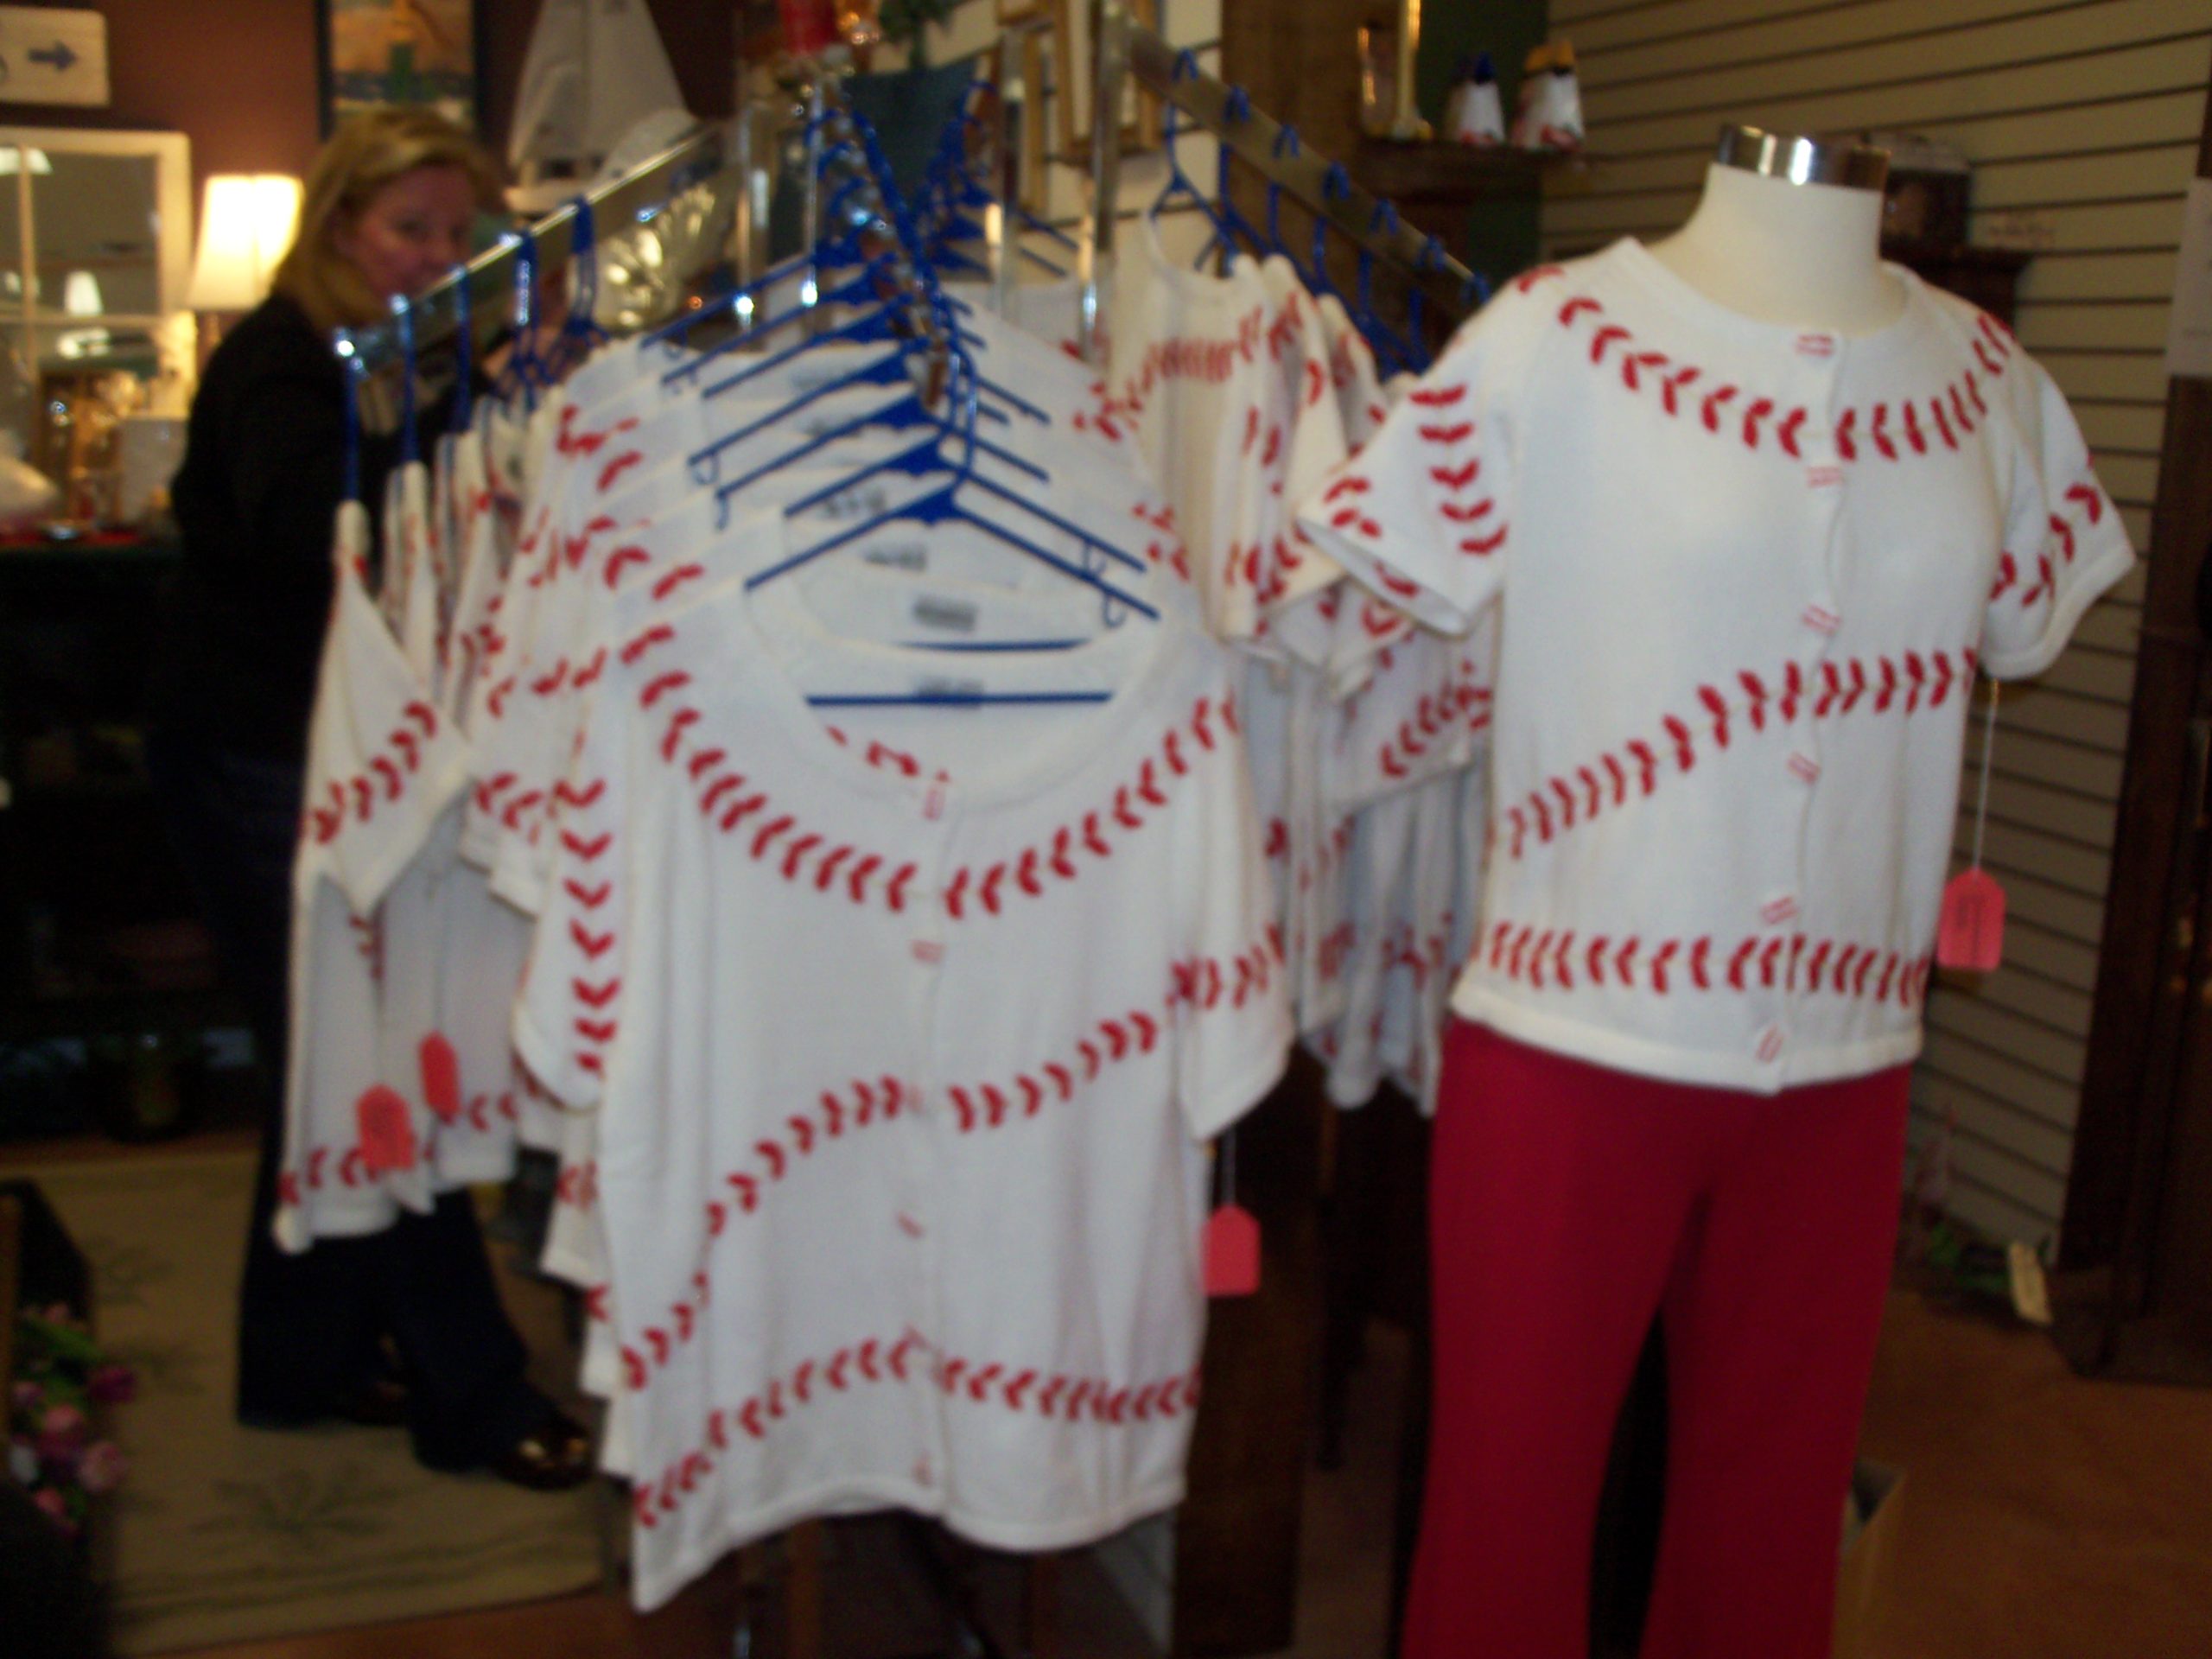 womens baseball clothing